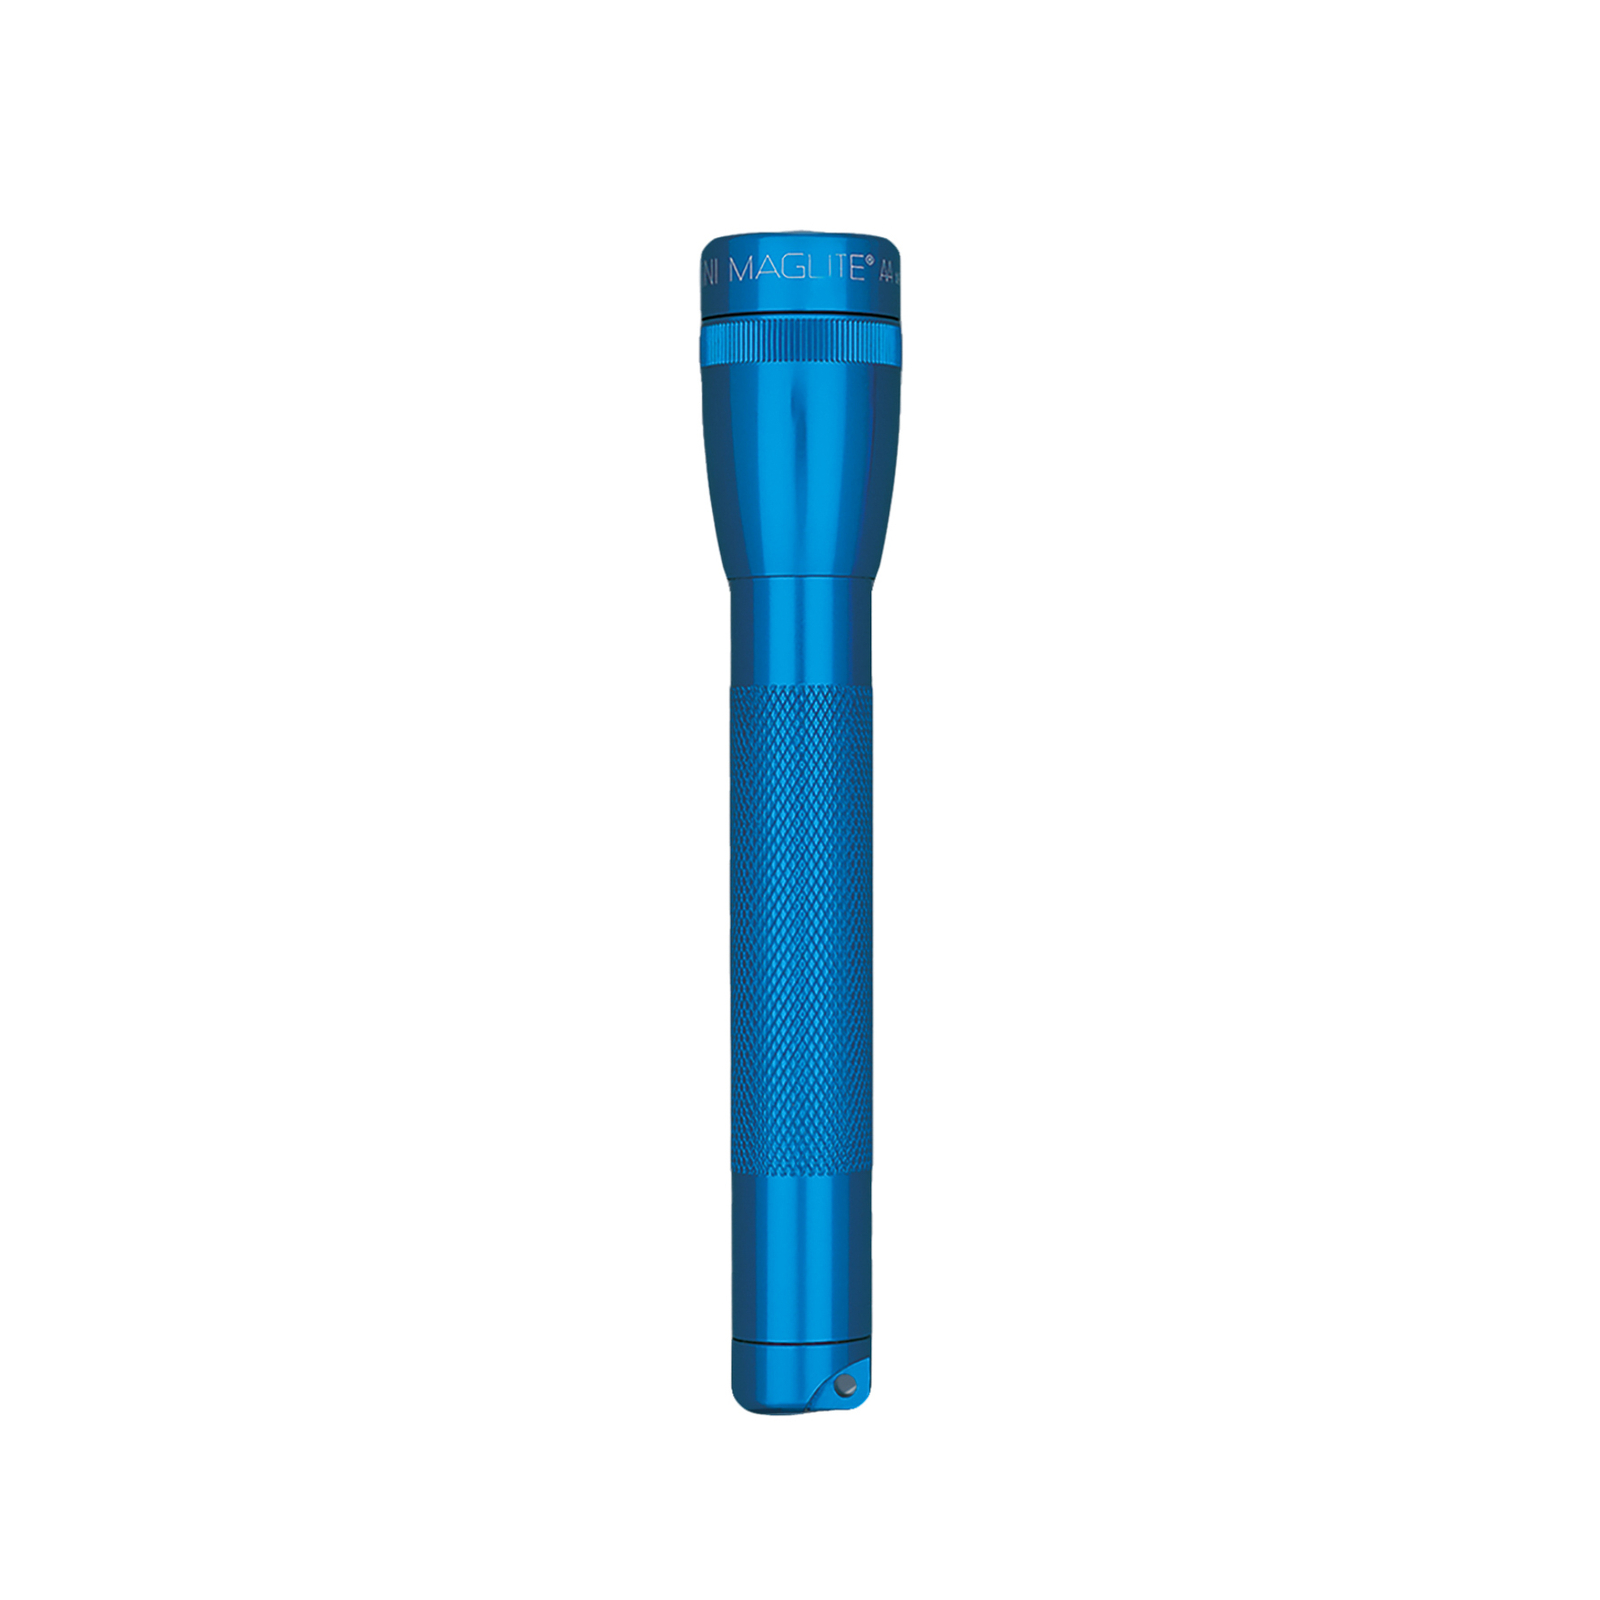 Maglite lampe de poche au xénon Mini, 2-Cell AA, Combo Pack, bleu